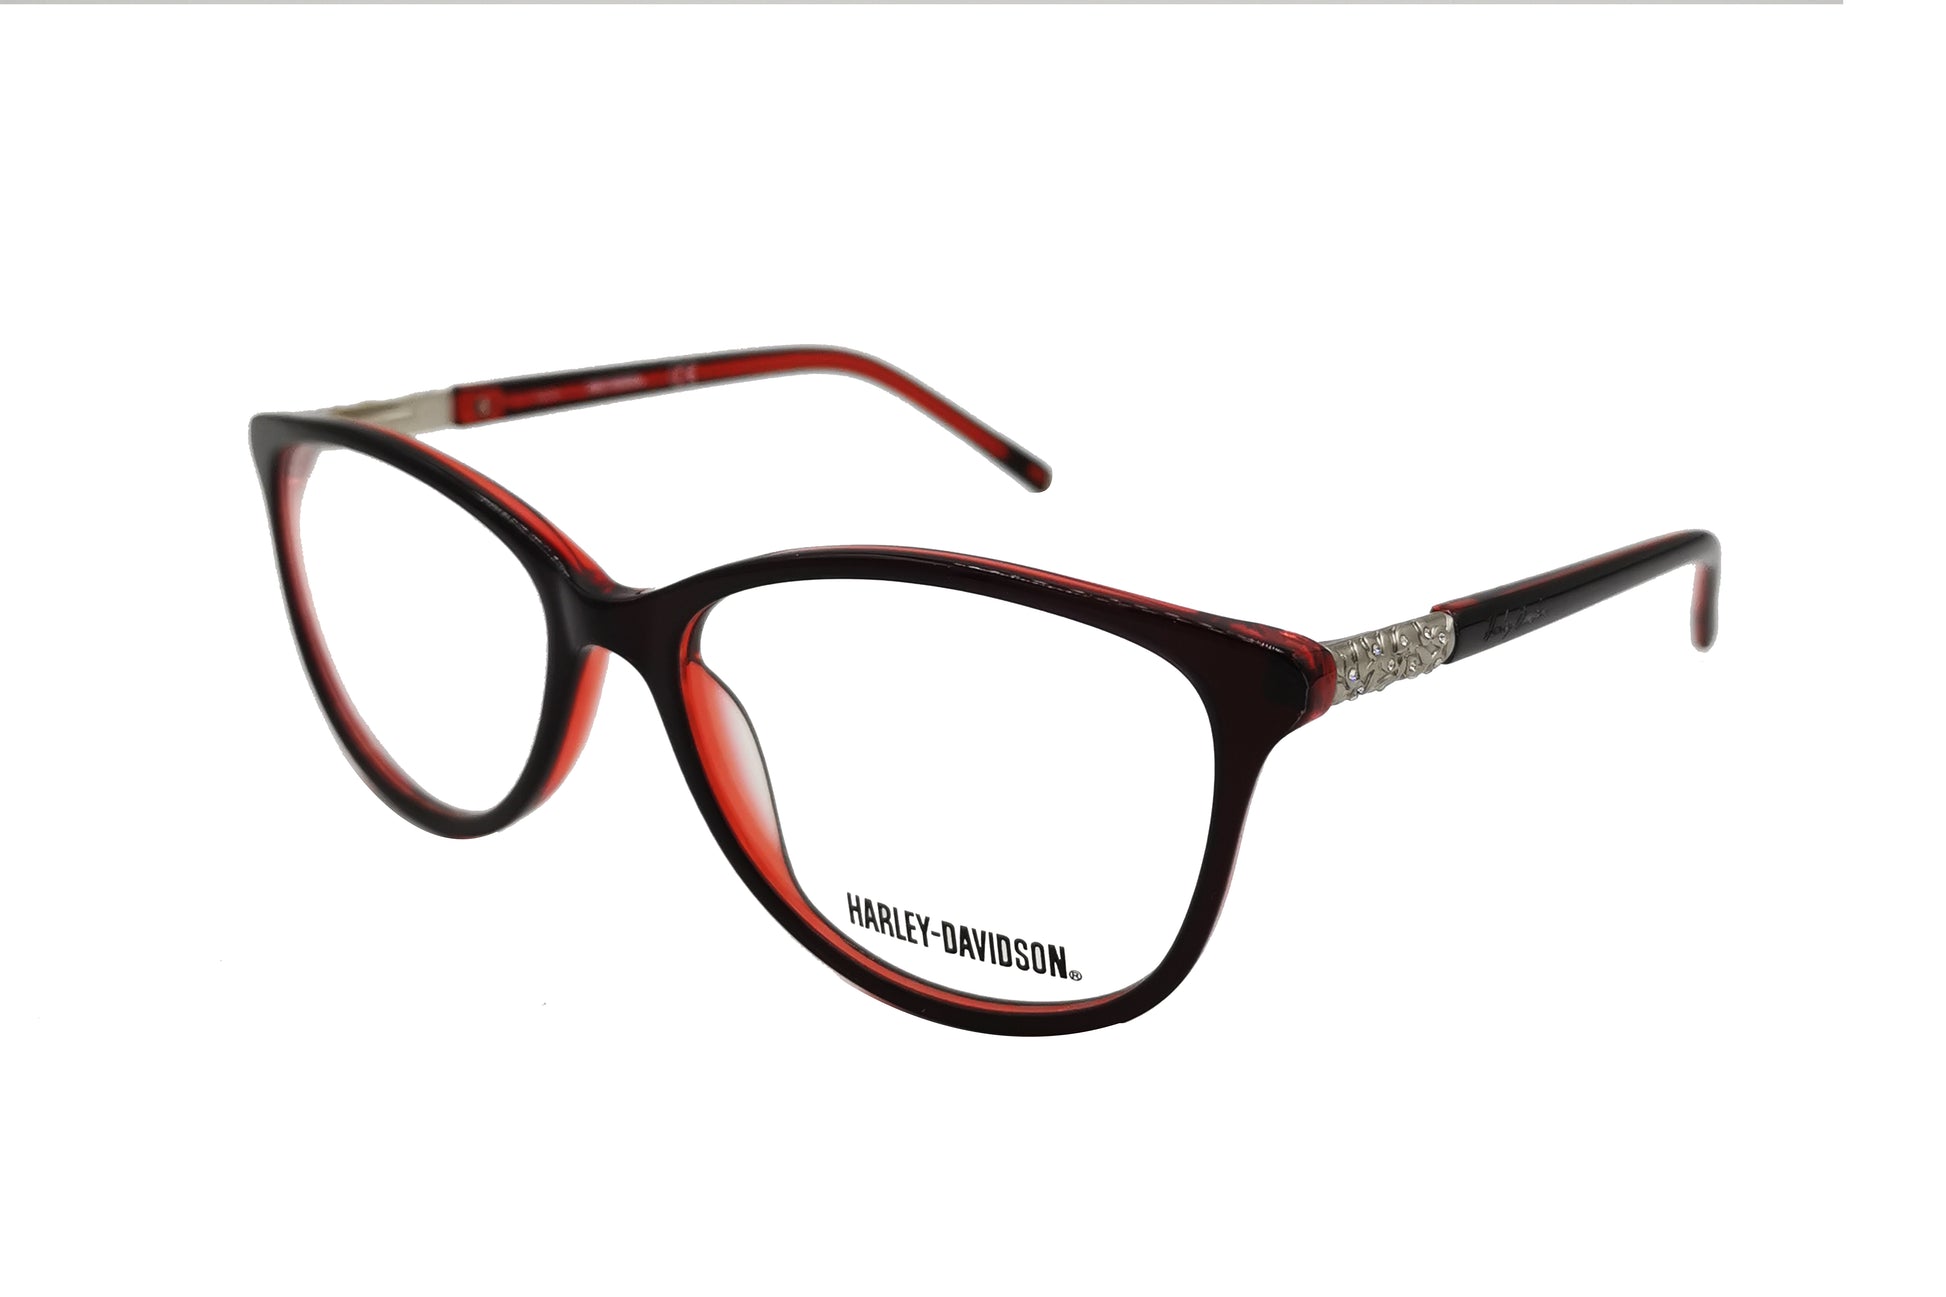 NS Luxury - 0535 - Red Wine - Eyeglasses